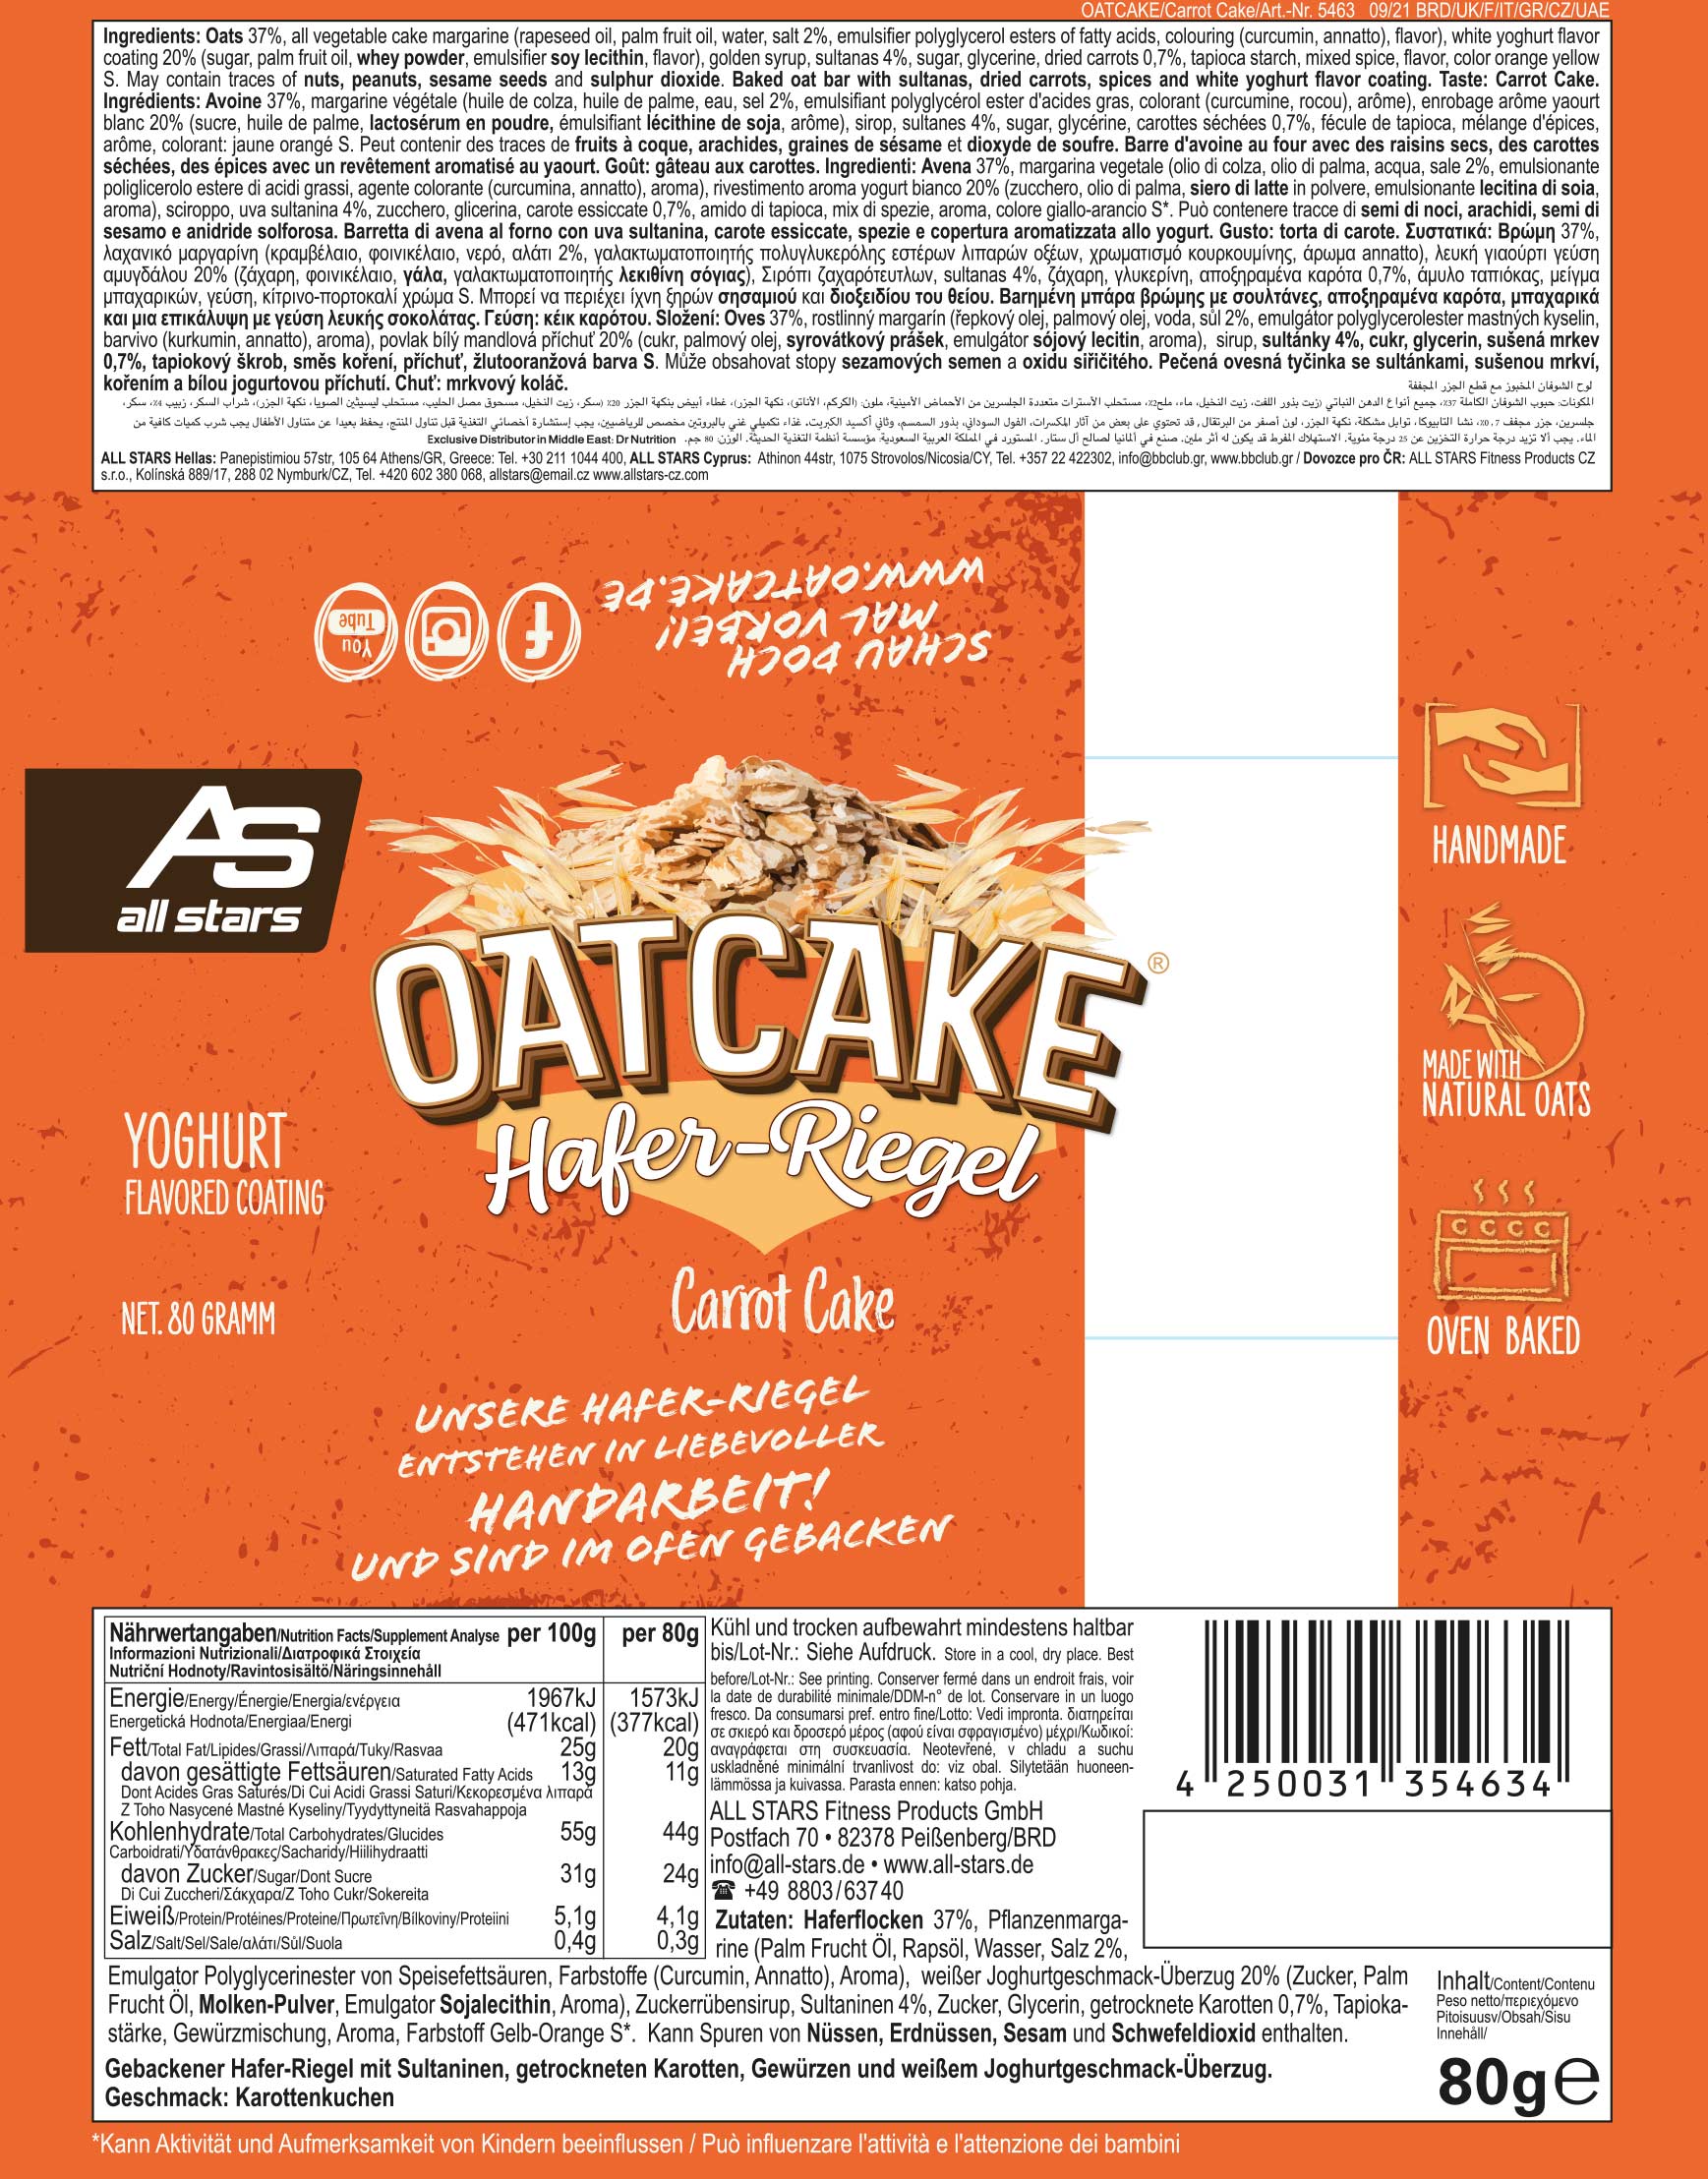 OATCAKE_Carrot-Cake_DRUCK_Previewe2rGeGWOOOdWy